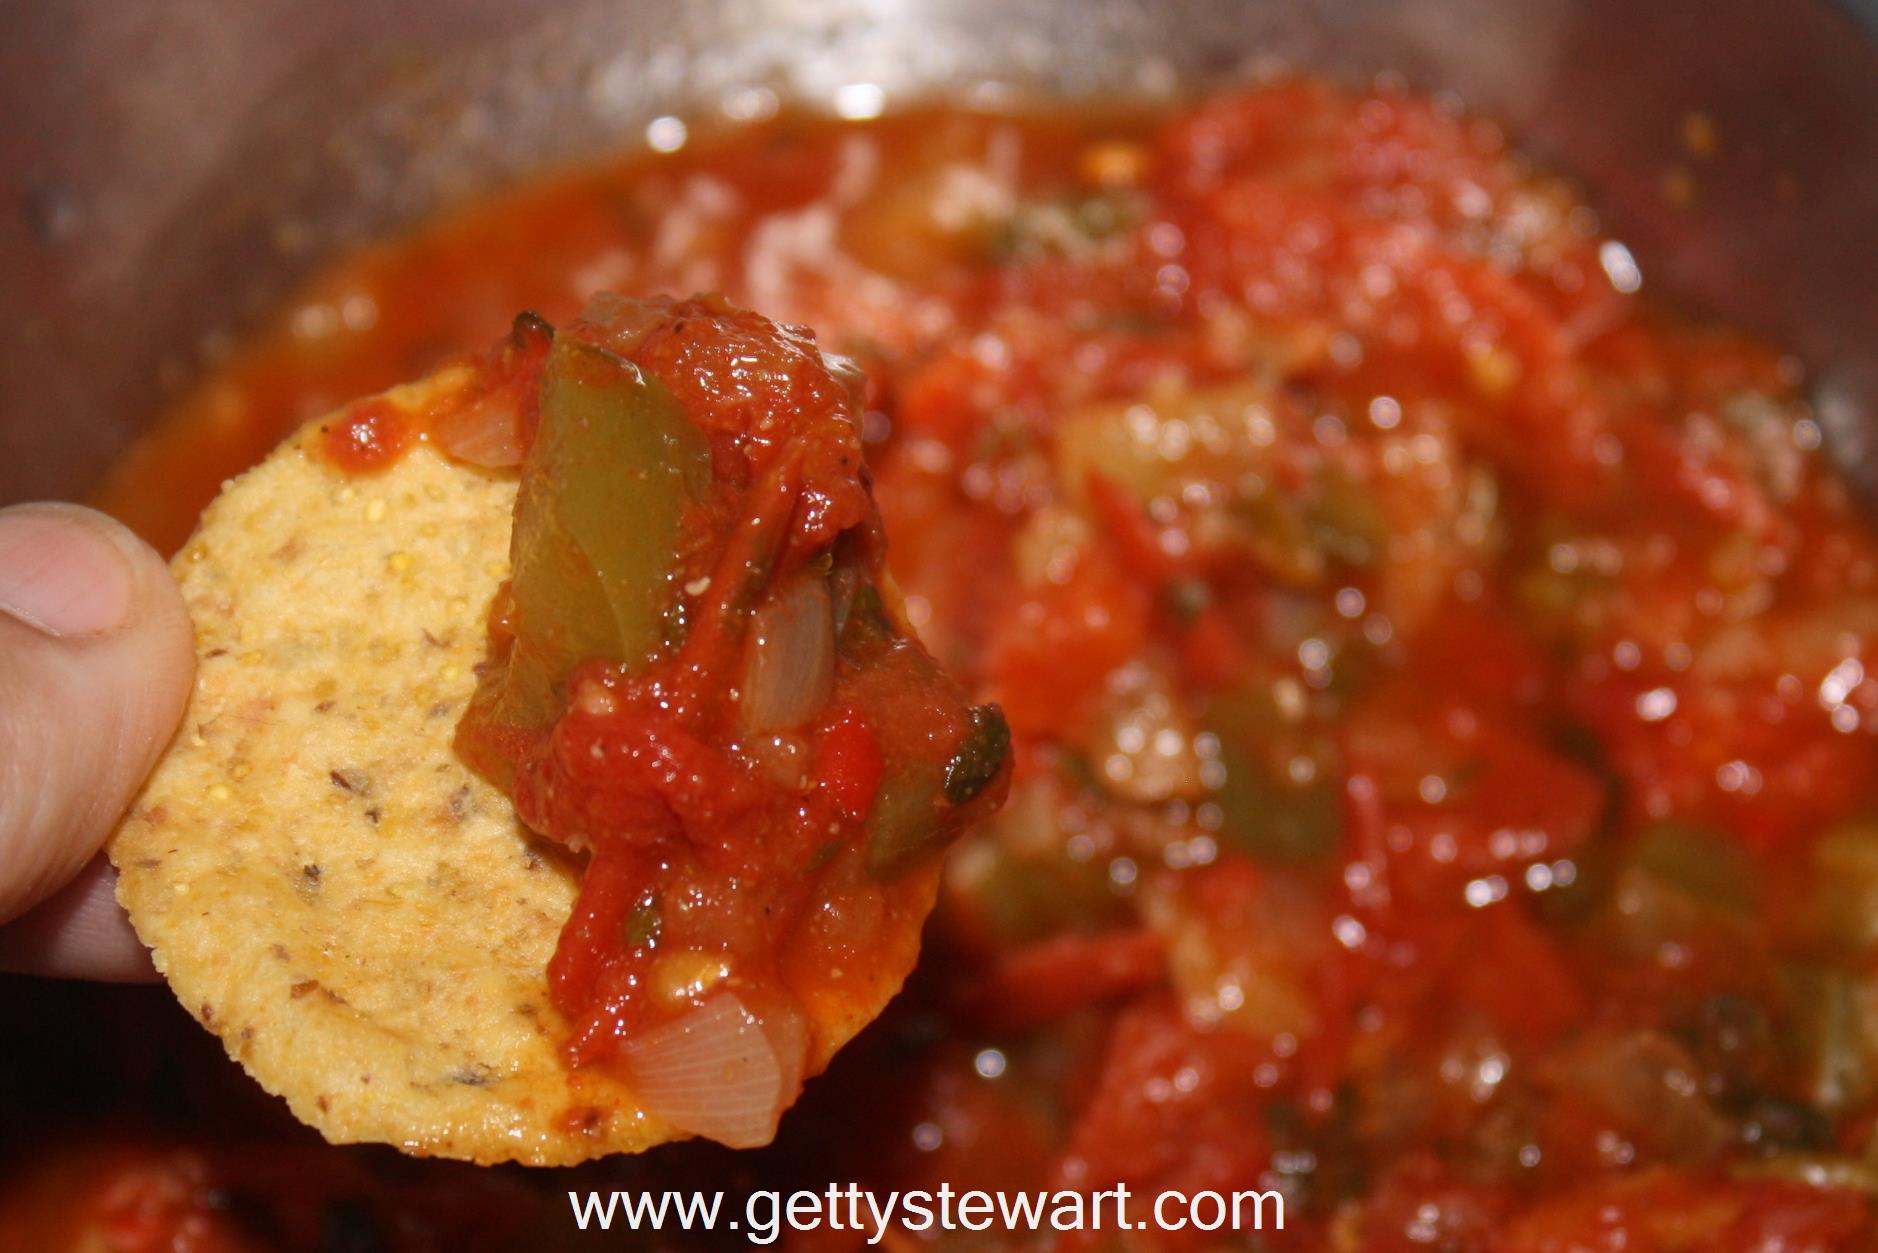 How To Make Freezer Salsa Tomatoes Getty Stewart